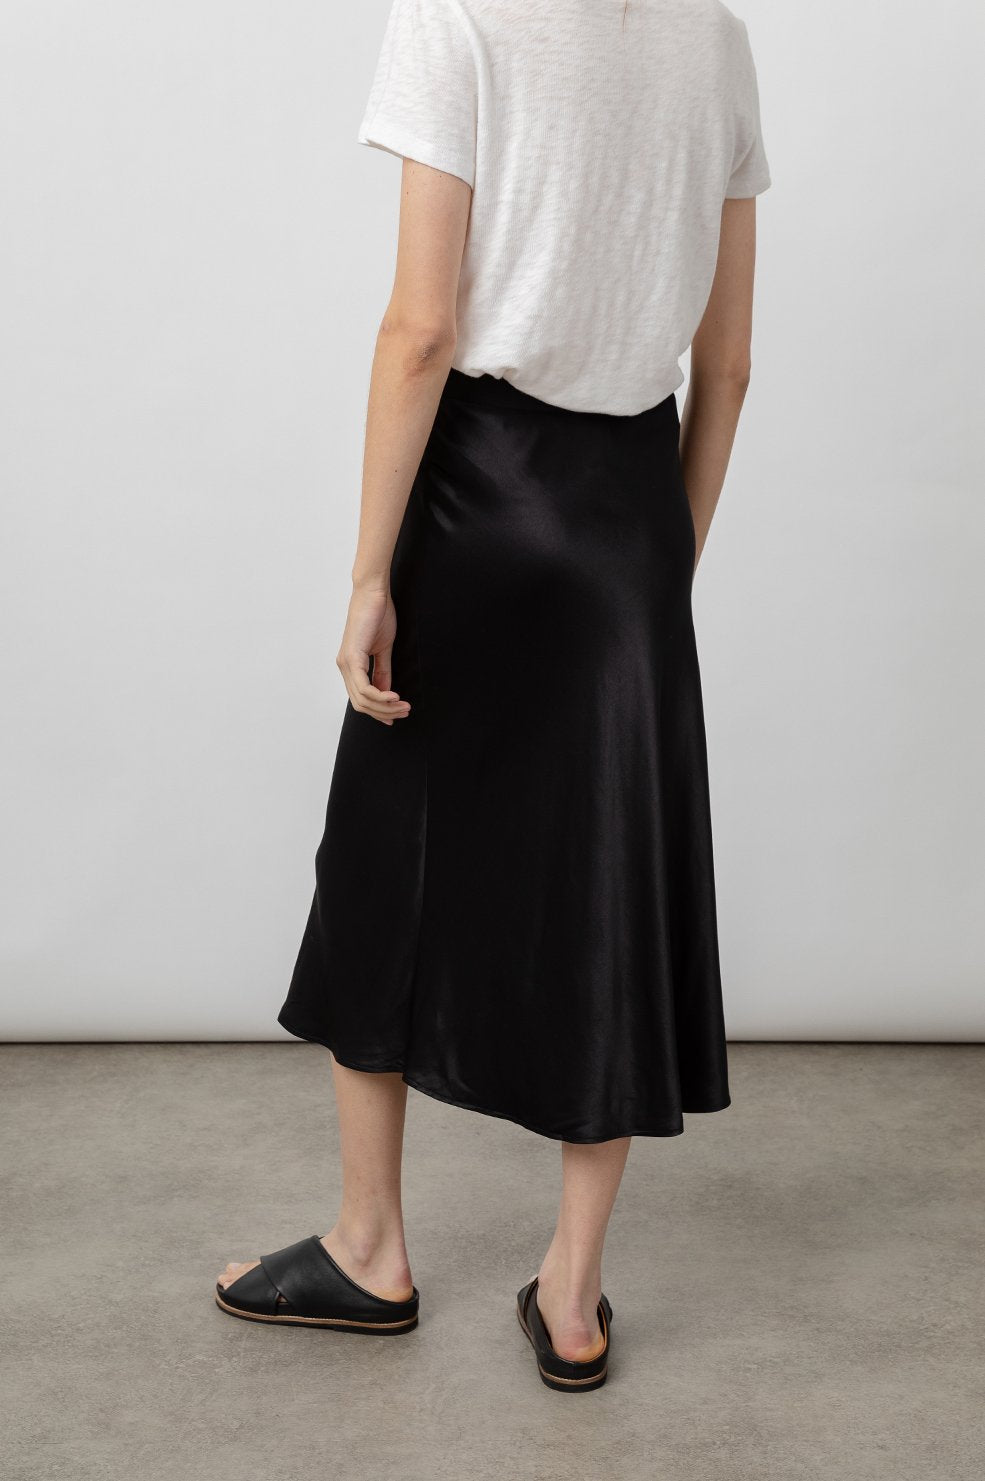 Berlin Skirt in Black - Madison's Niche 